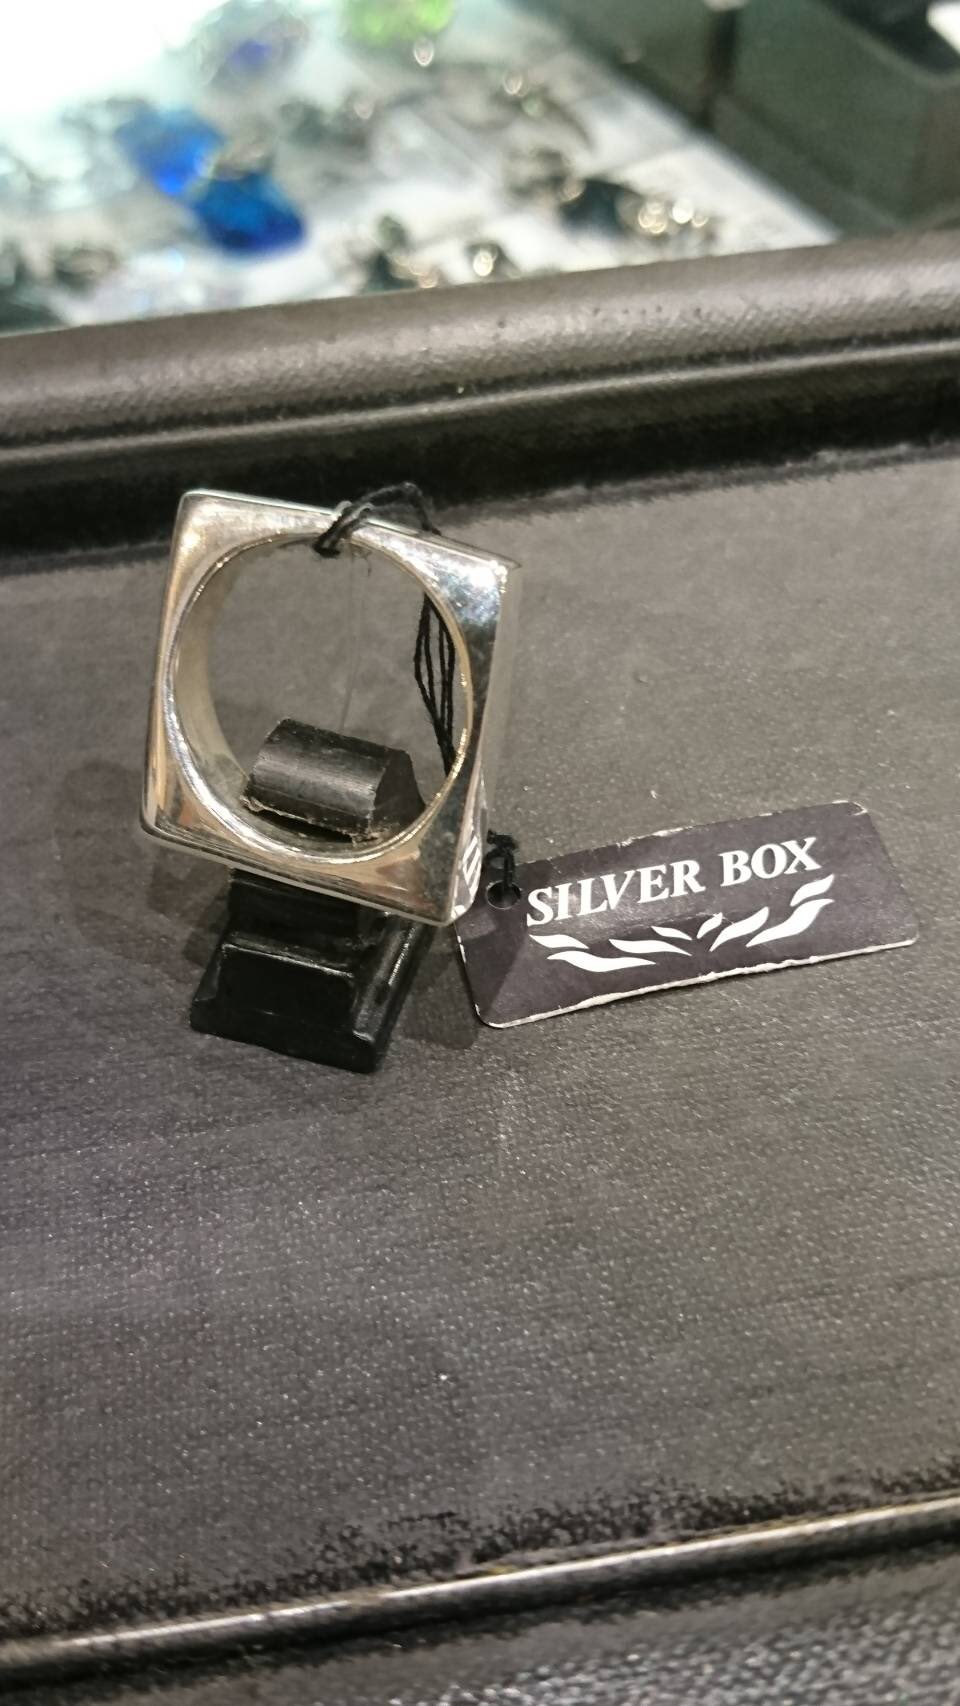 SILVERBOX高崎店 @silver box tksk / X